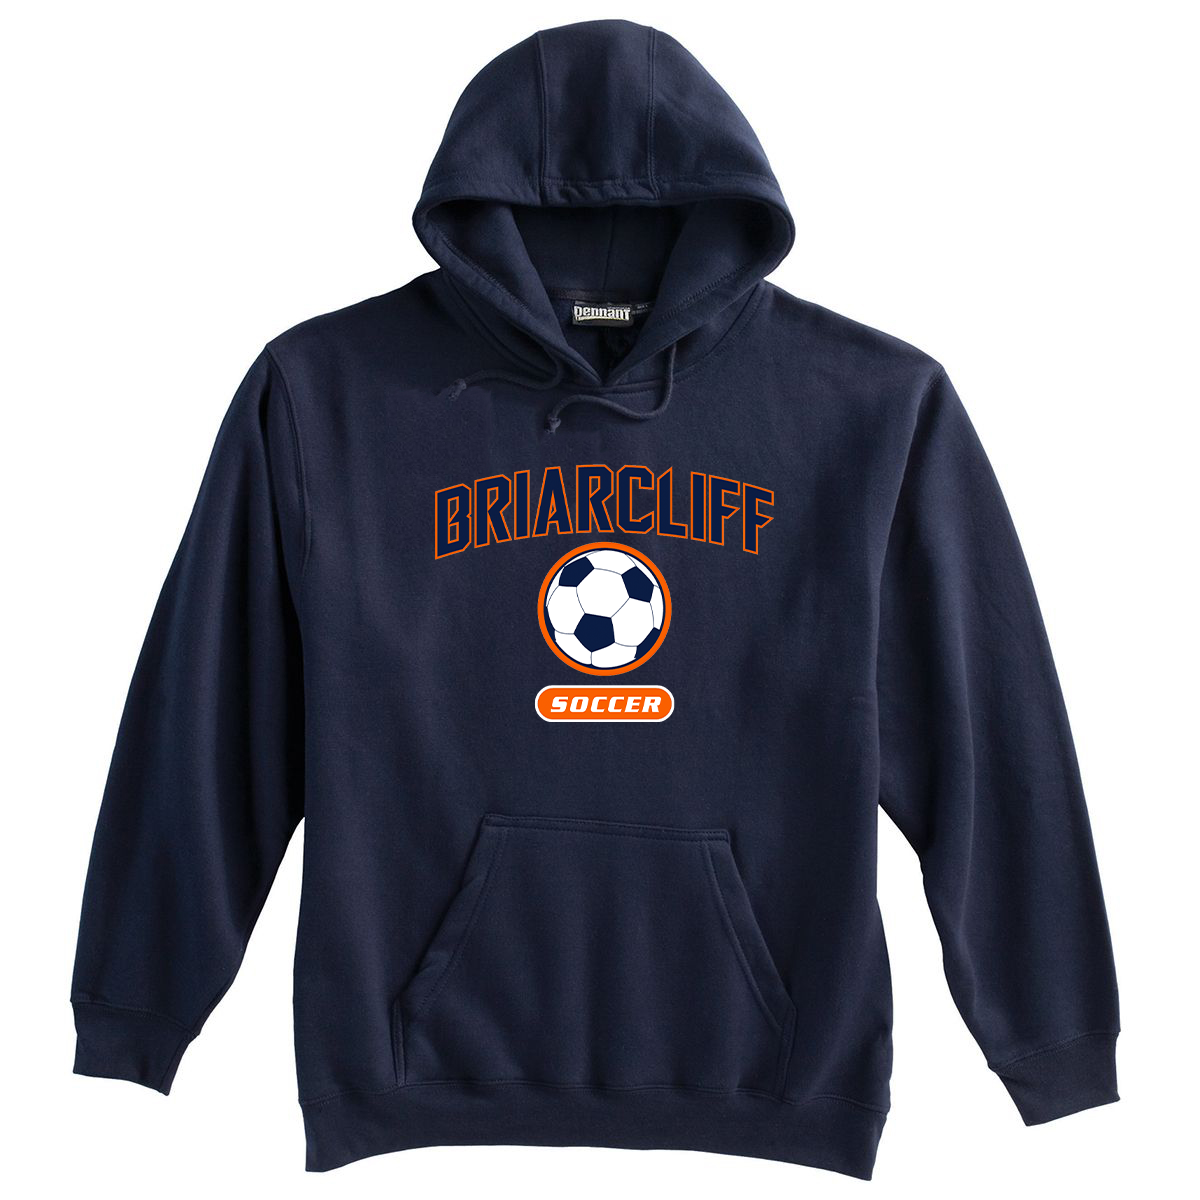 Briarcliff Soccer Sweatshirt